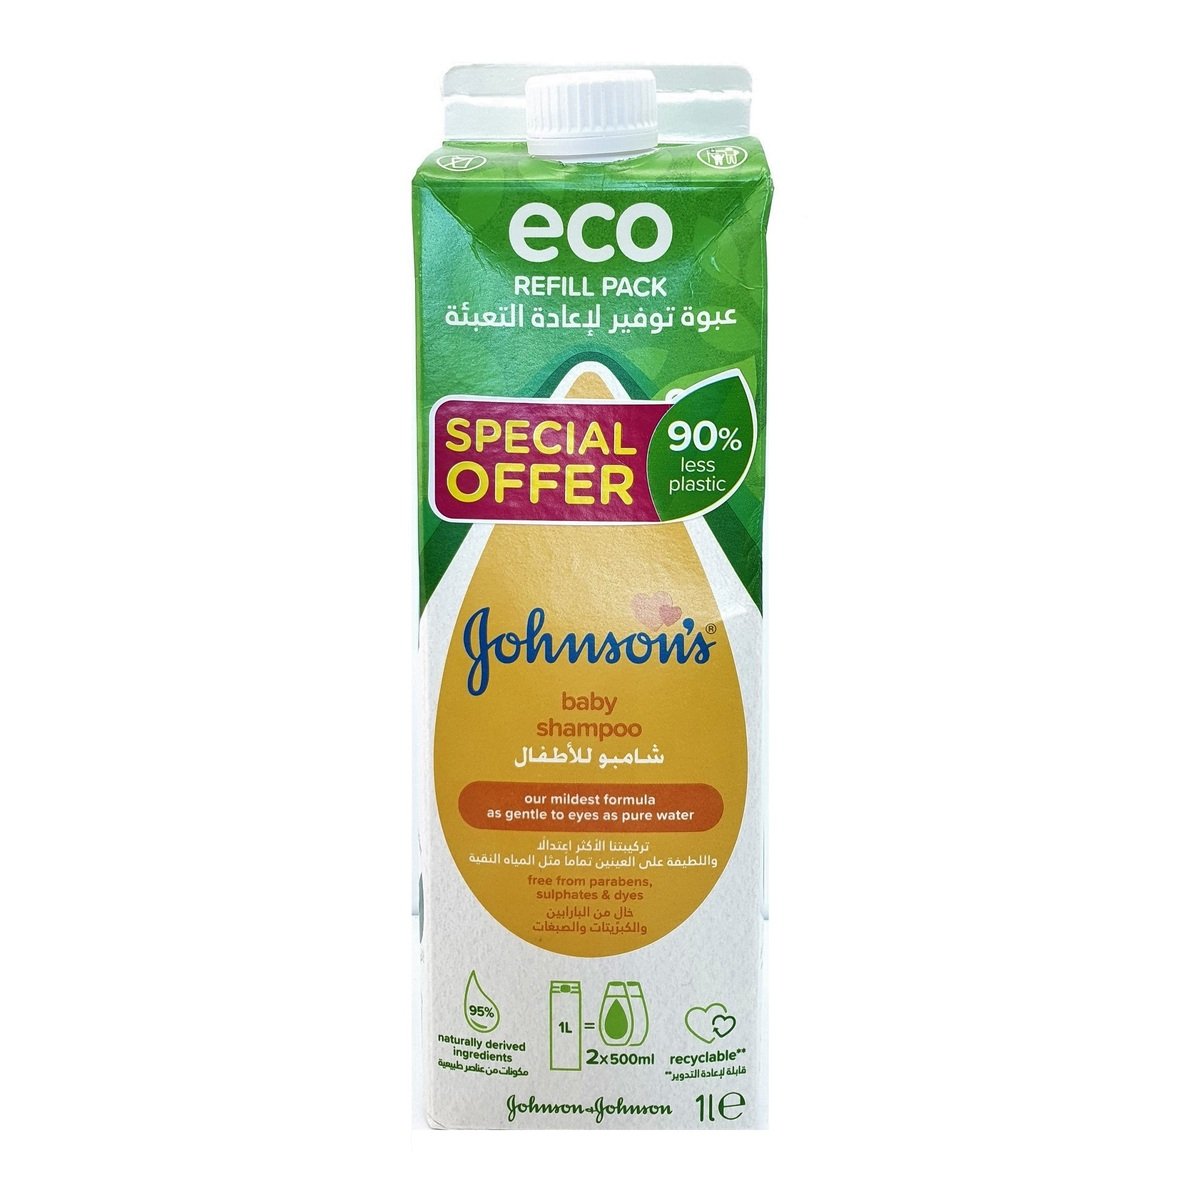 Johnson's Eco Refill Tetra Pack Baby Shampoo Value Pack 1 Litre